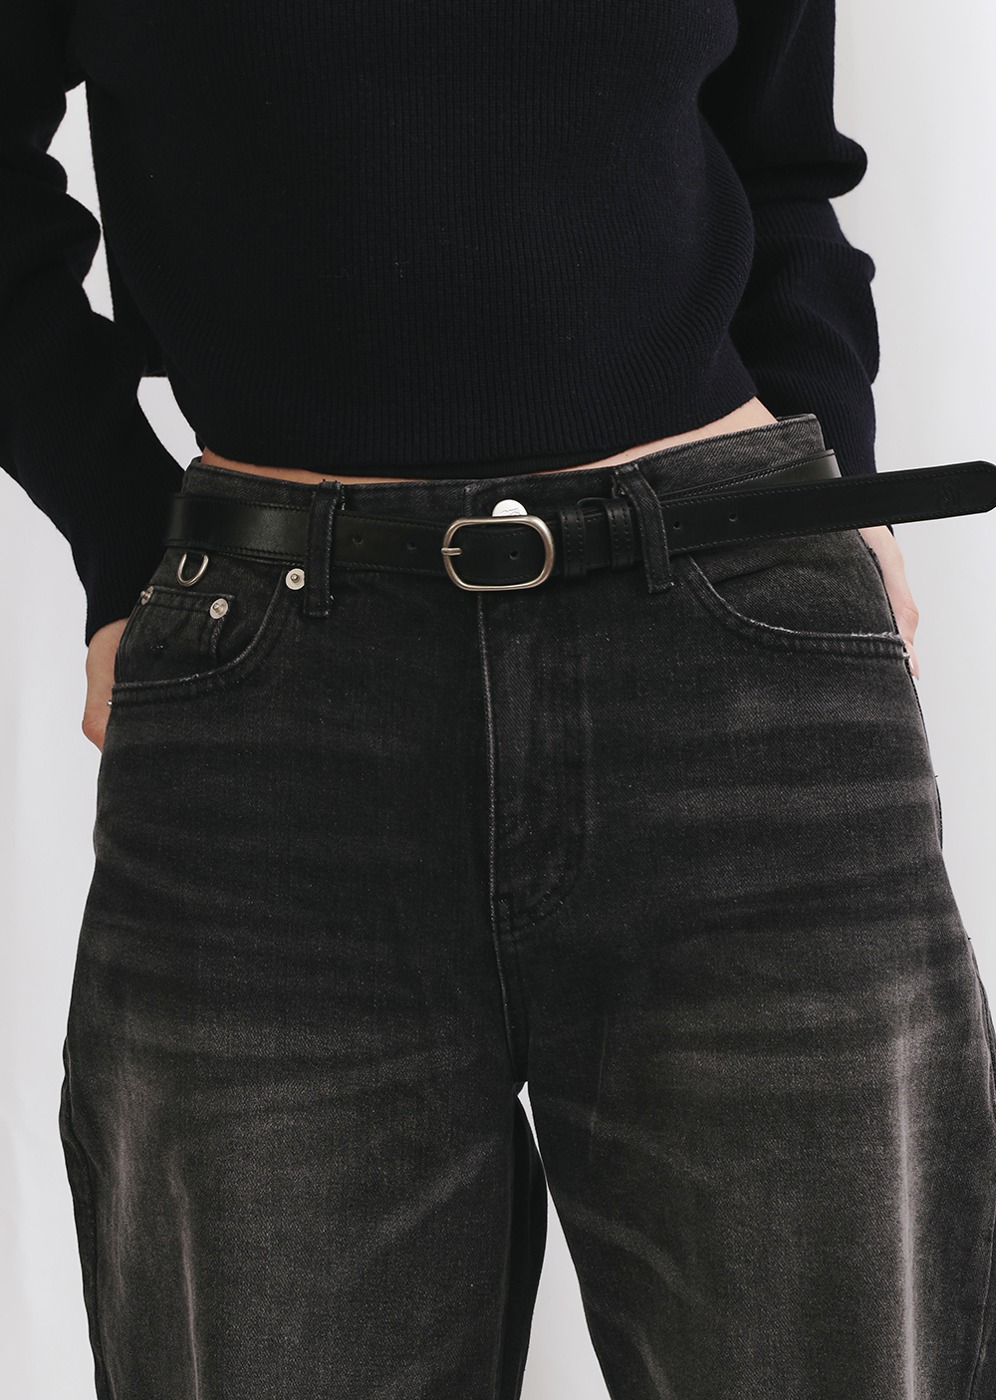 Ellipse Leather Belt [BLACK]Ellipse Leather Belt [BLACK]로씨로씨